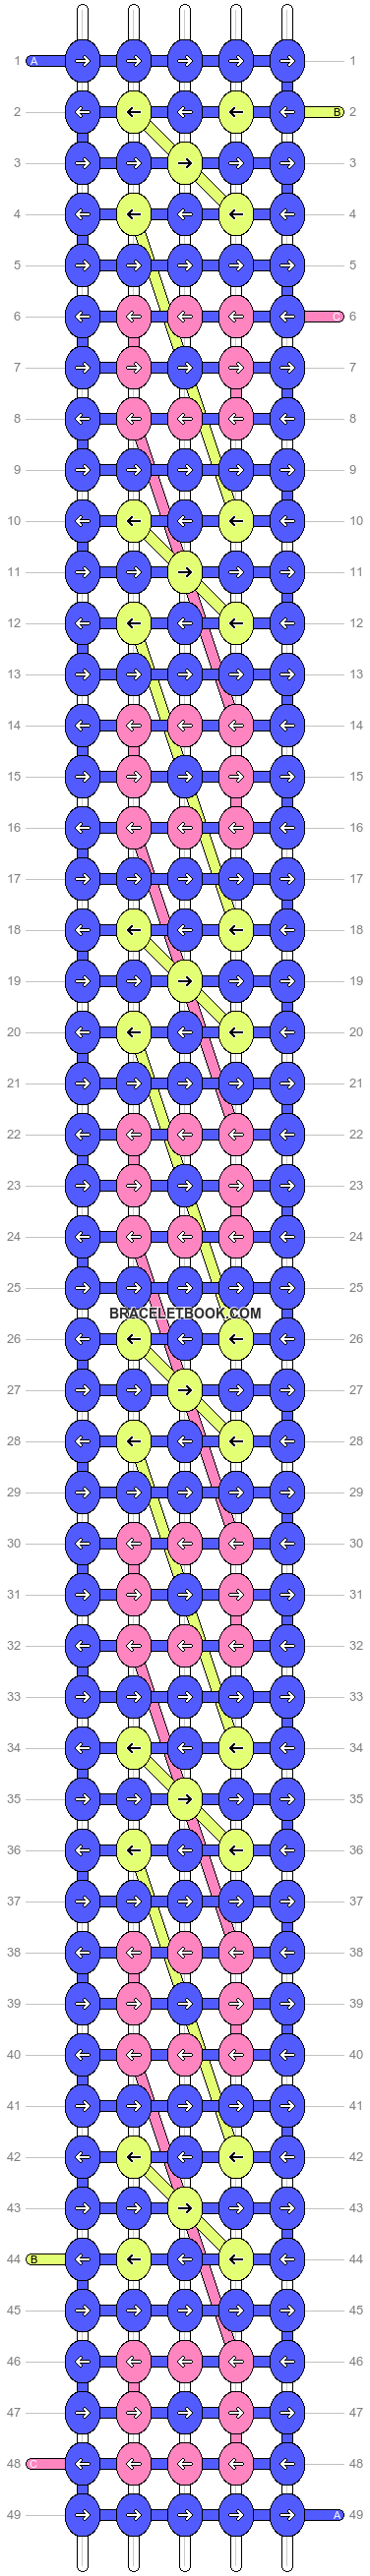 Alpha pattern #63235 variation #115917 pattern